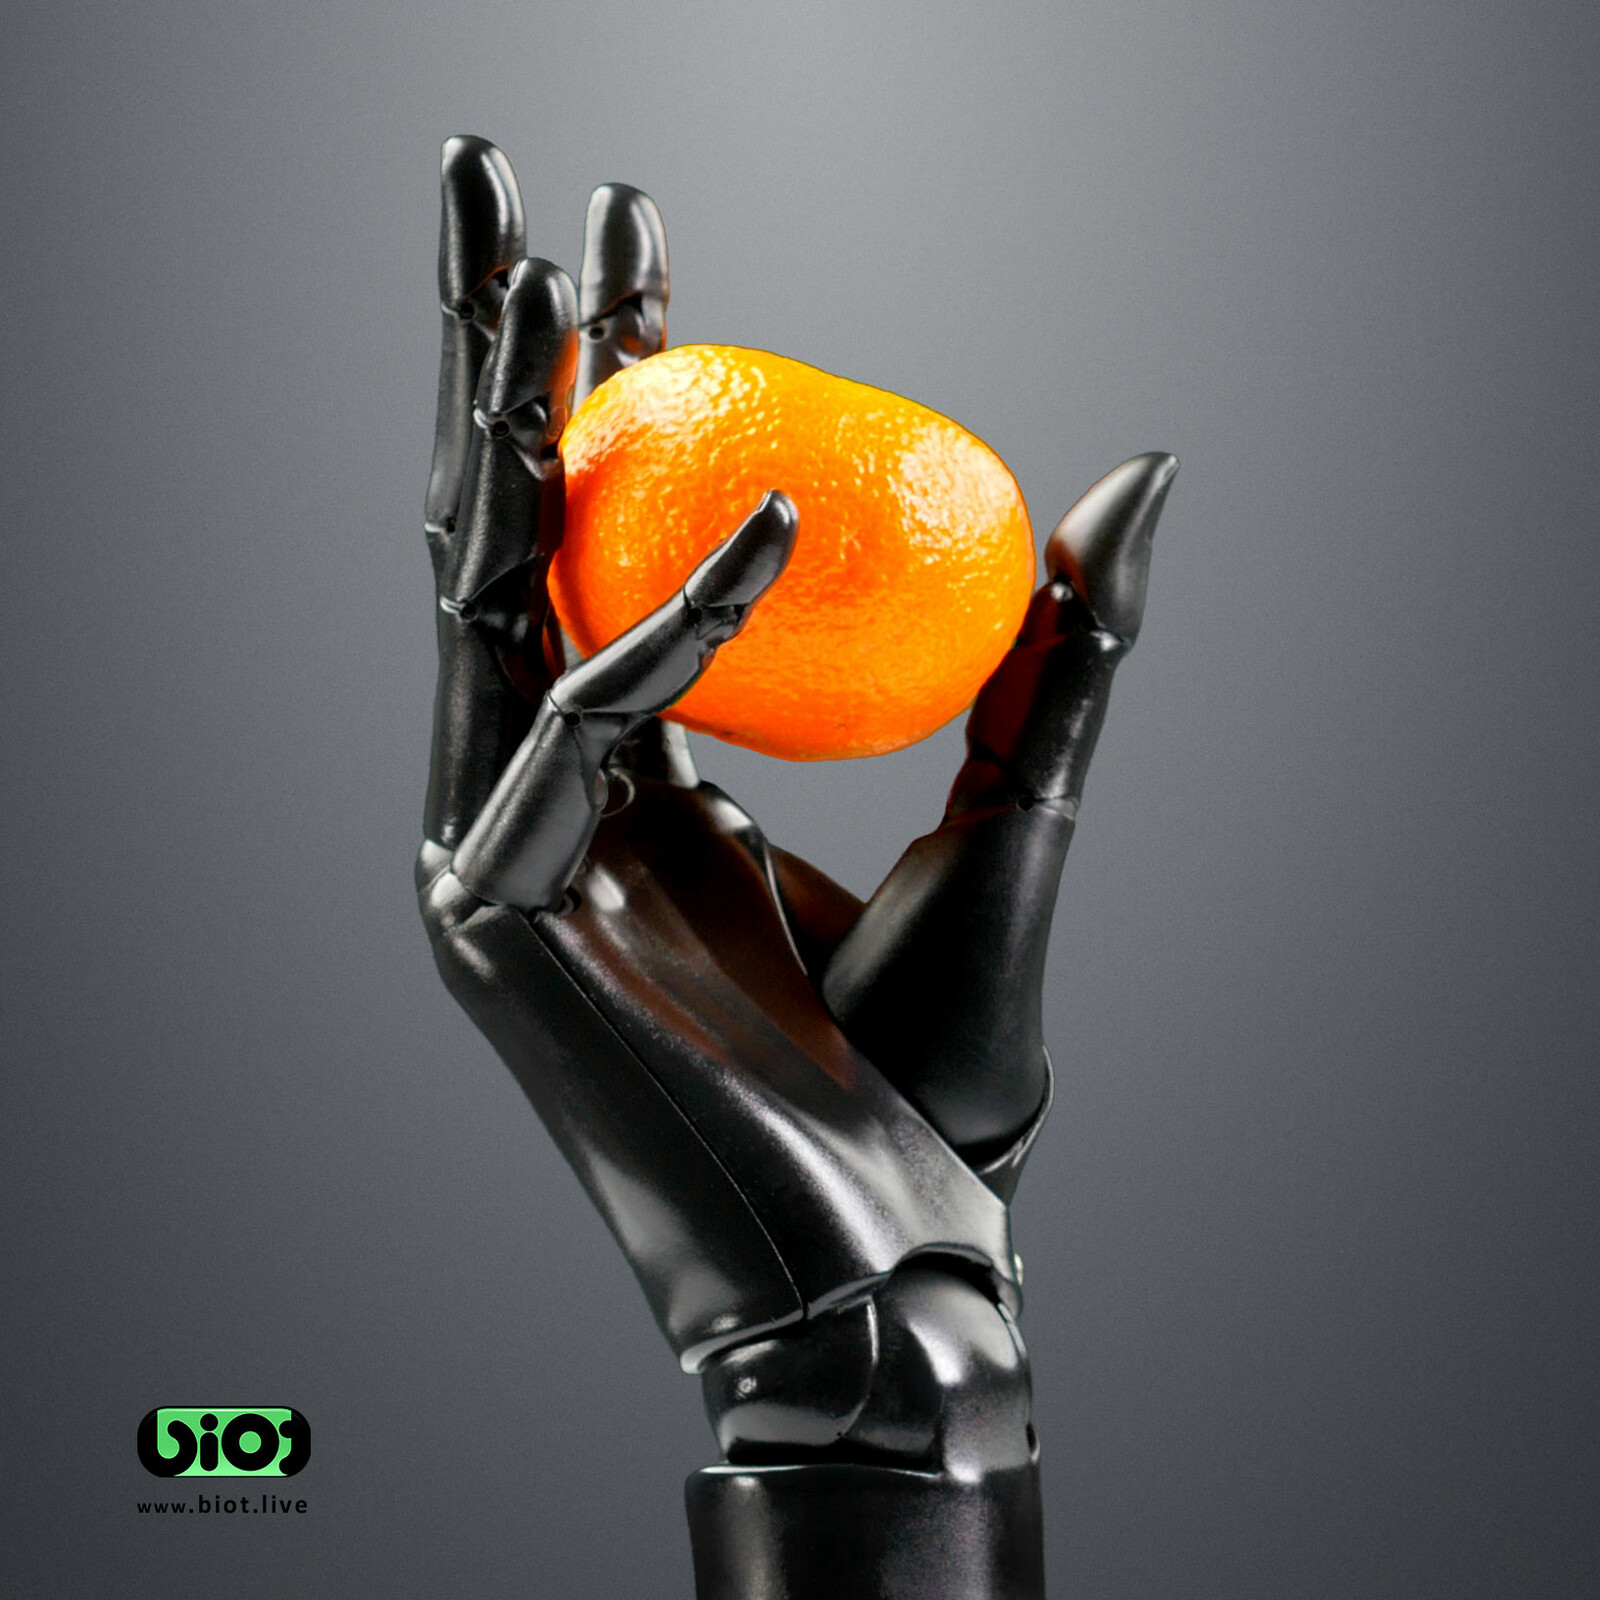 Biot Hand with orange